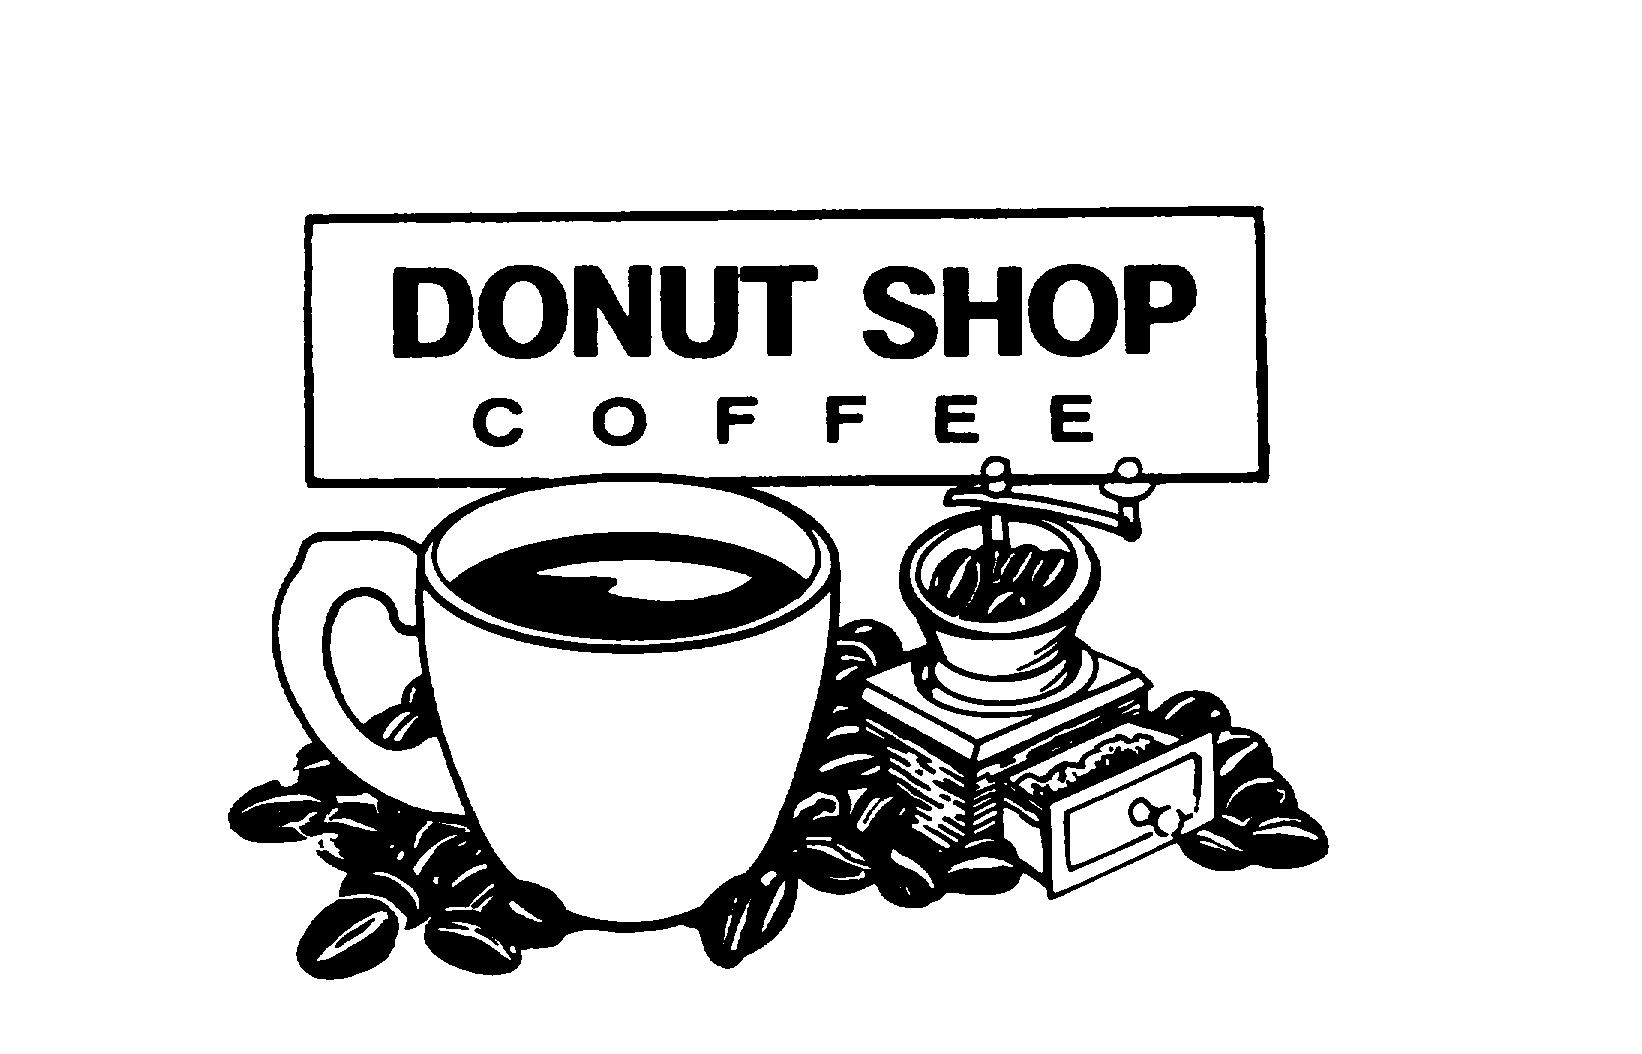  DONUT SHOP COFFEE